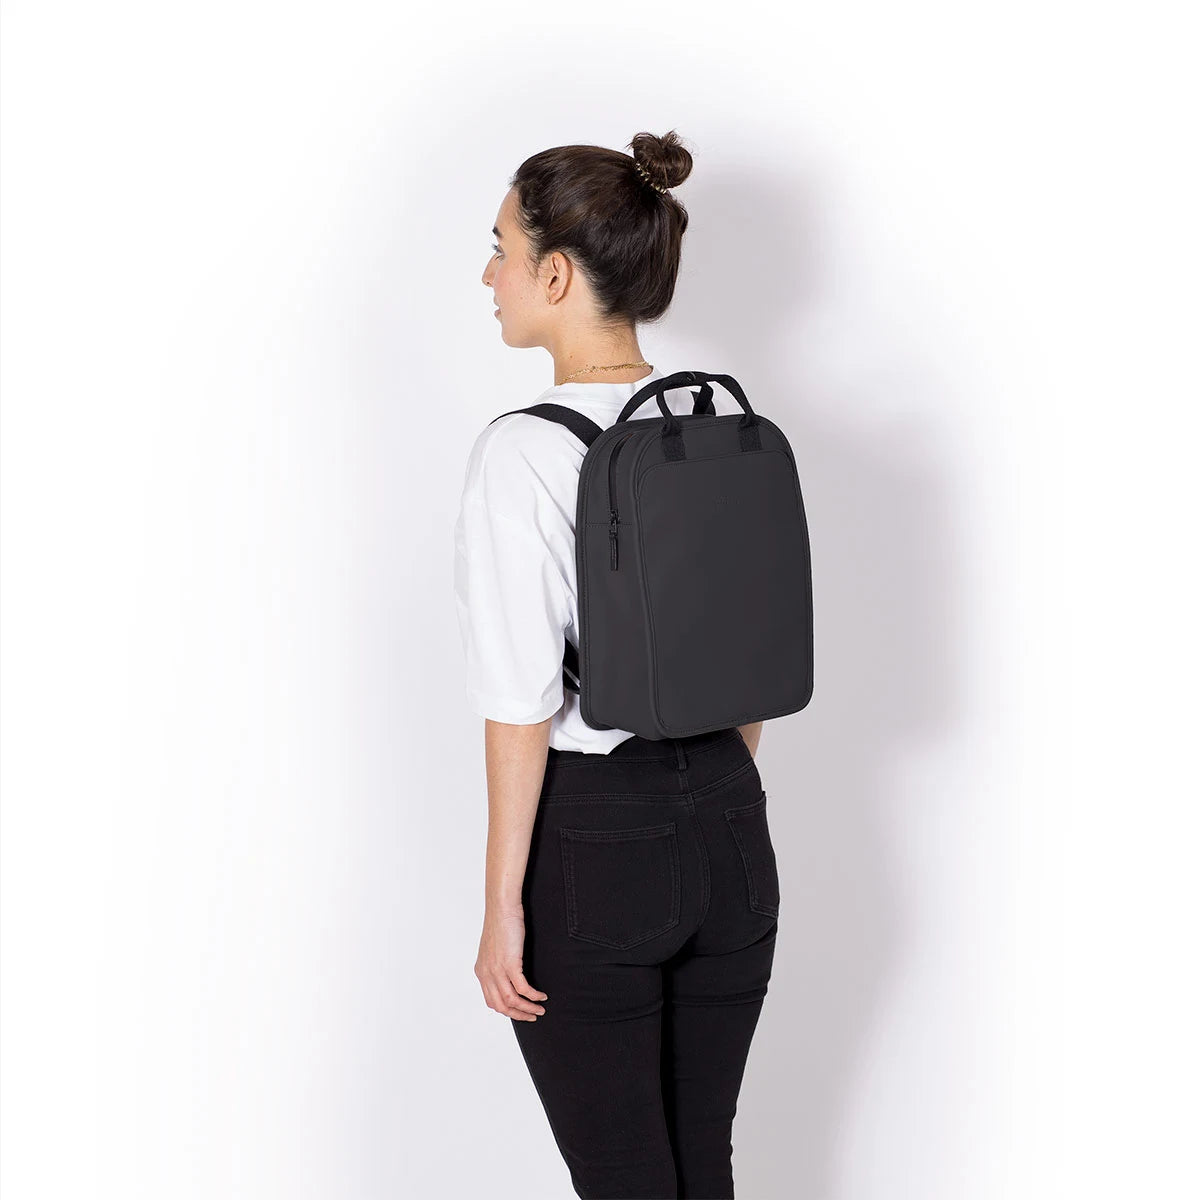 Alison Mini Backpack Black